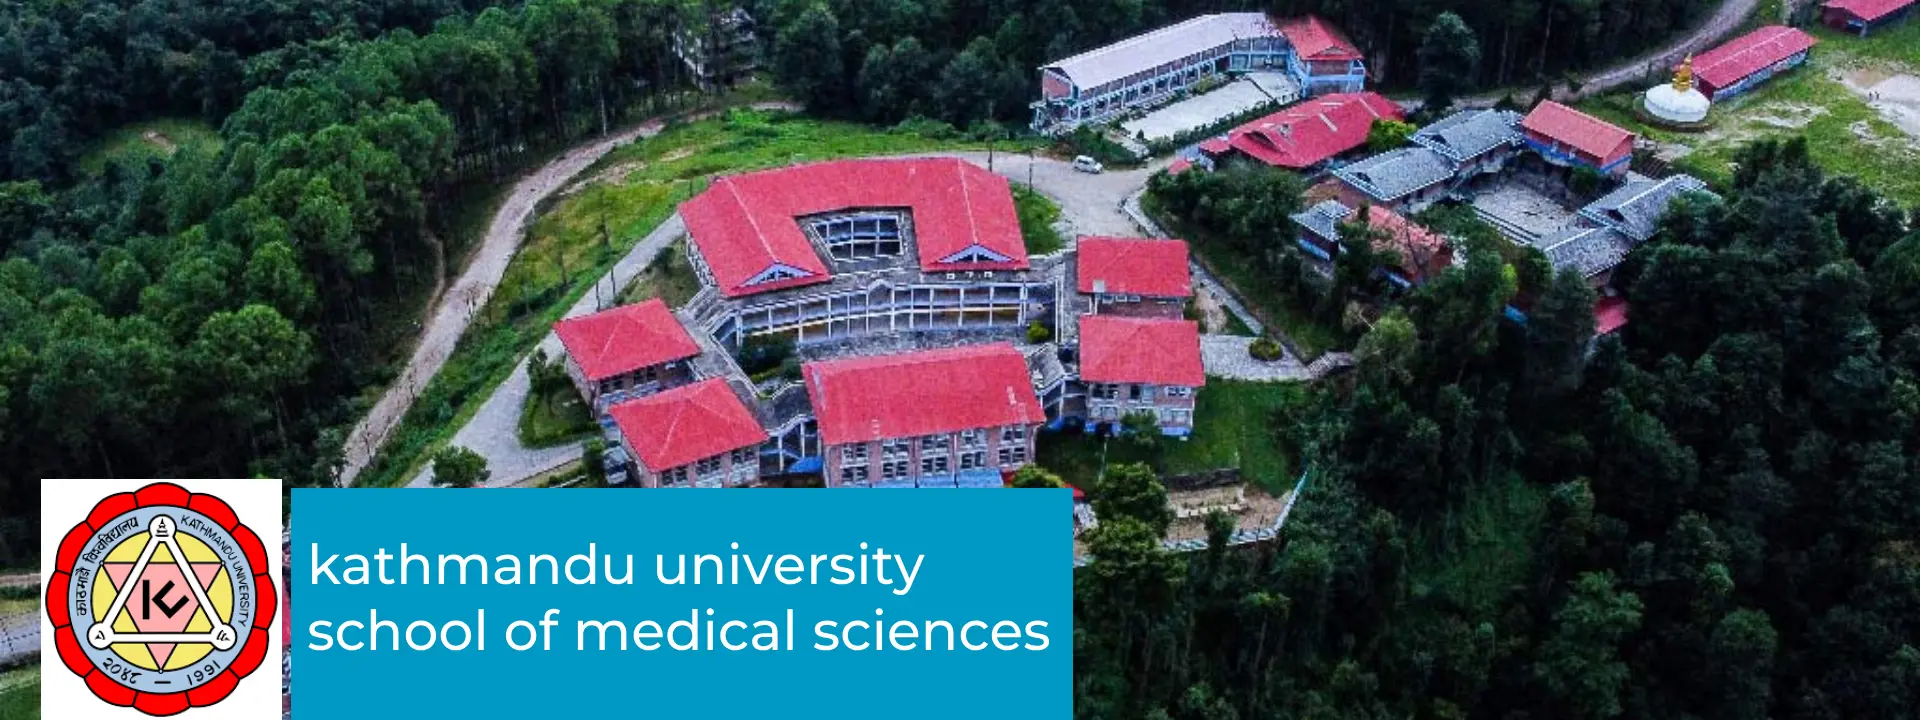 kathmandu university school of medical sciences 1